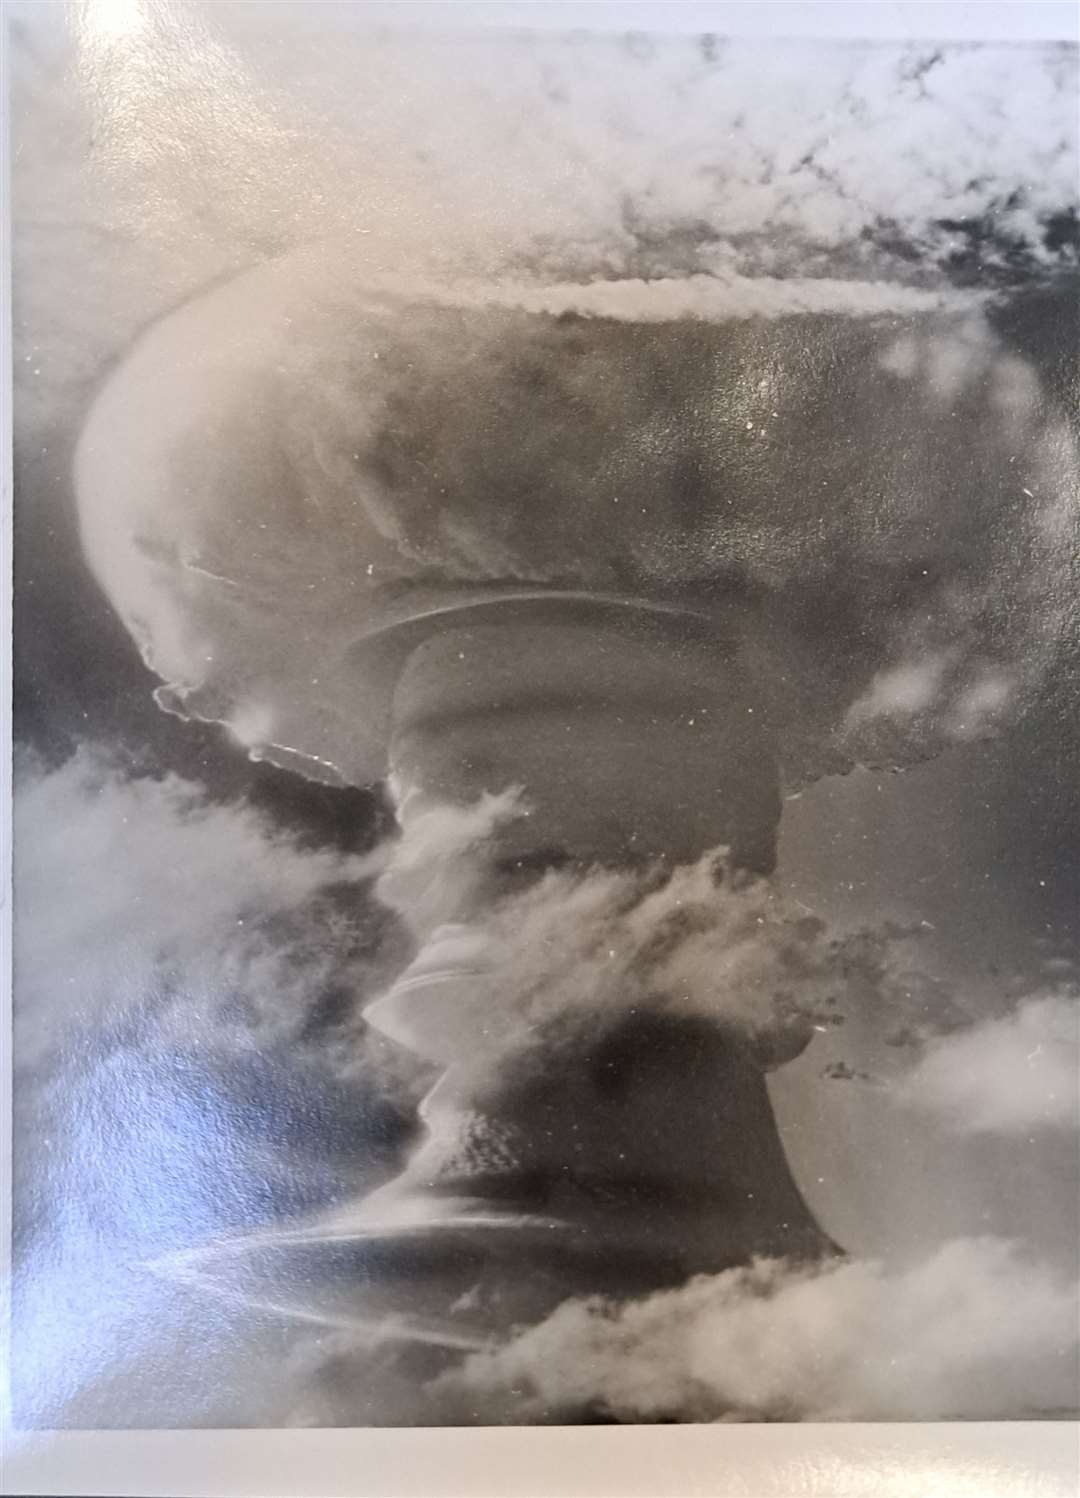 The mushroom cloud from Grapple X